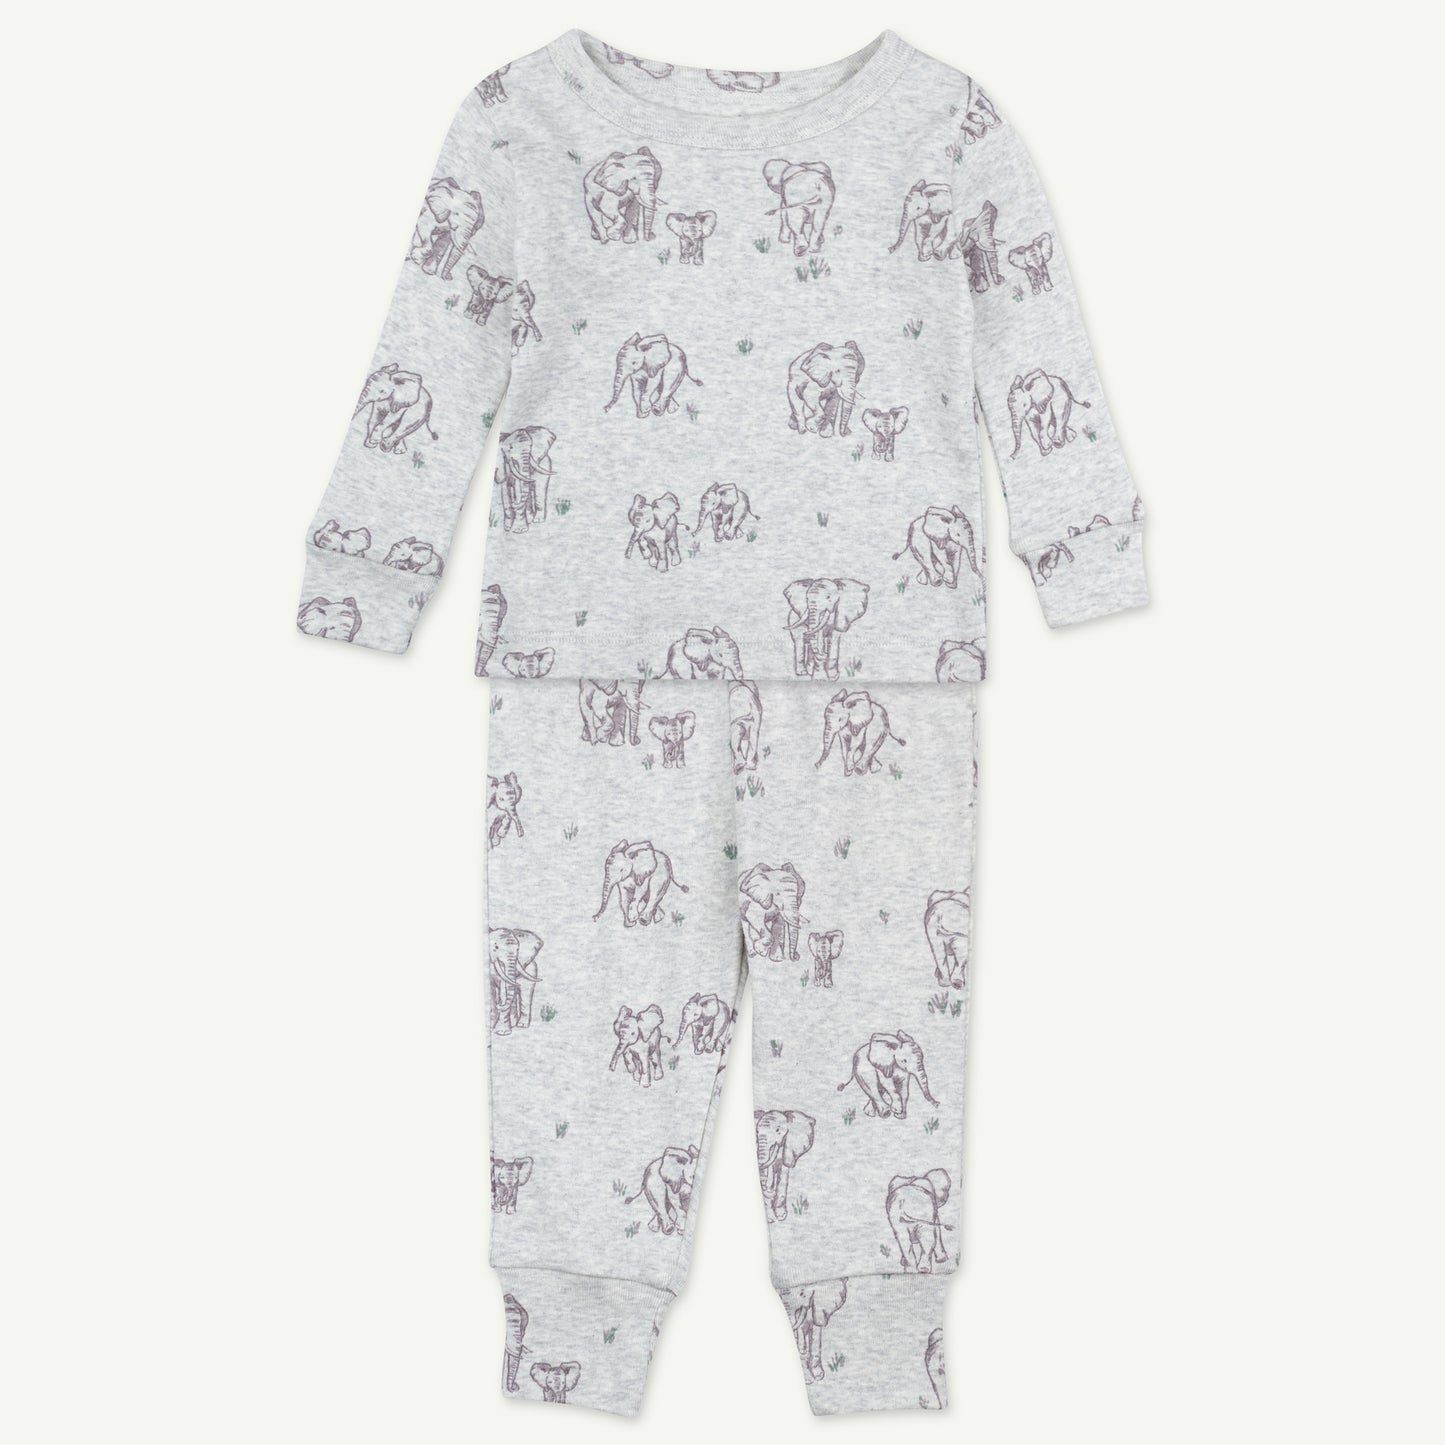 2-Piece Pajama in Elephant Print - Toddler